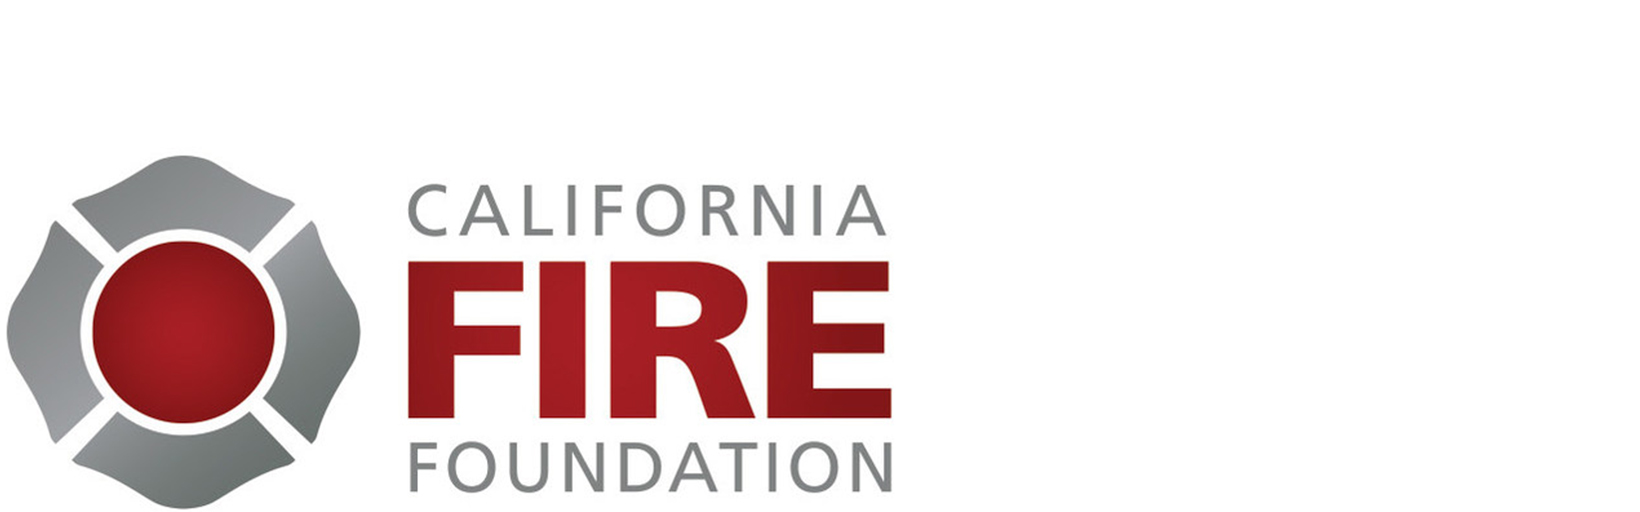 California Fire Foundation